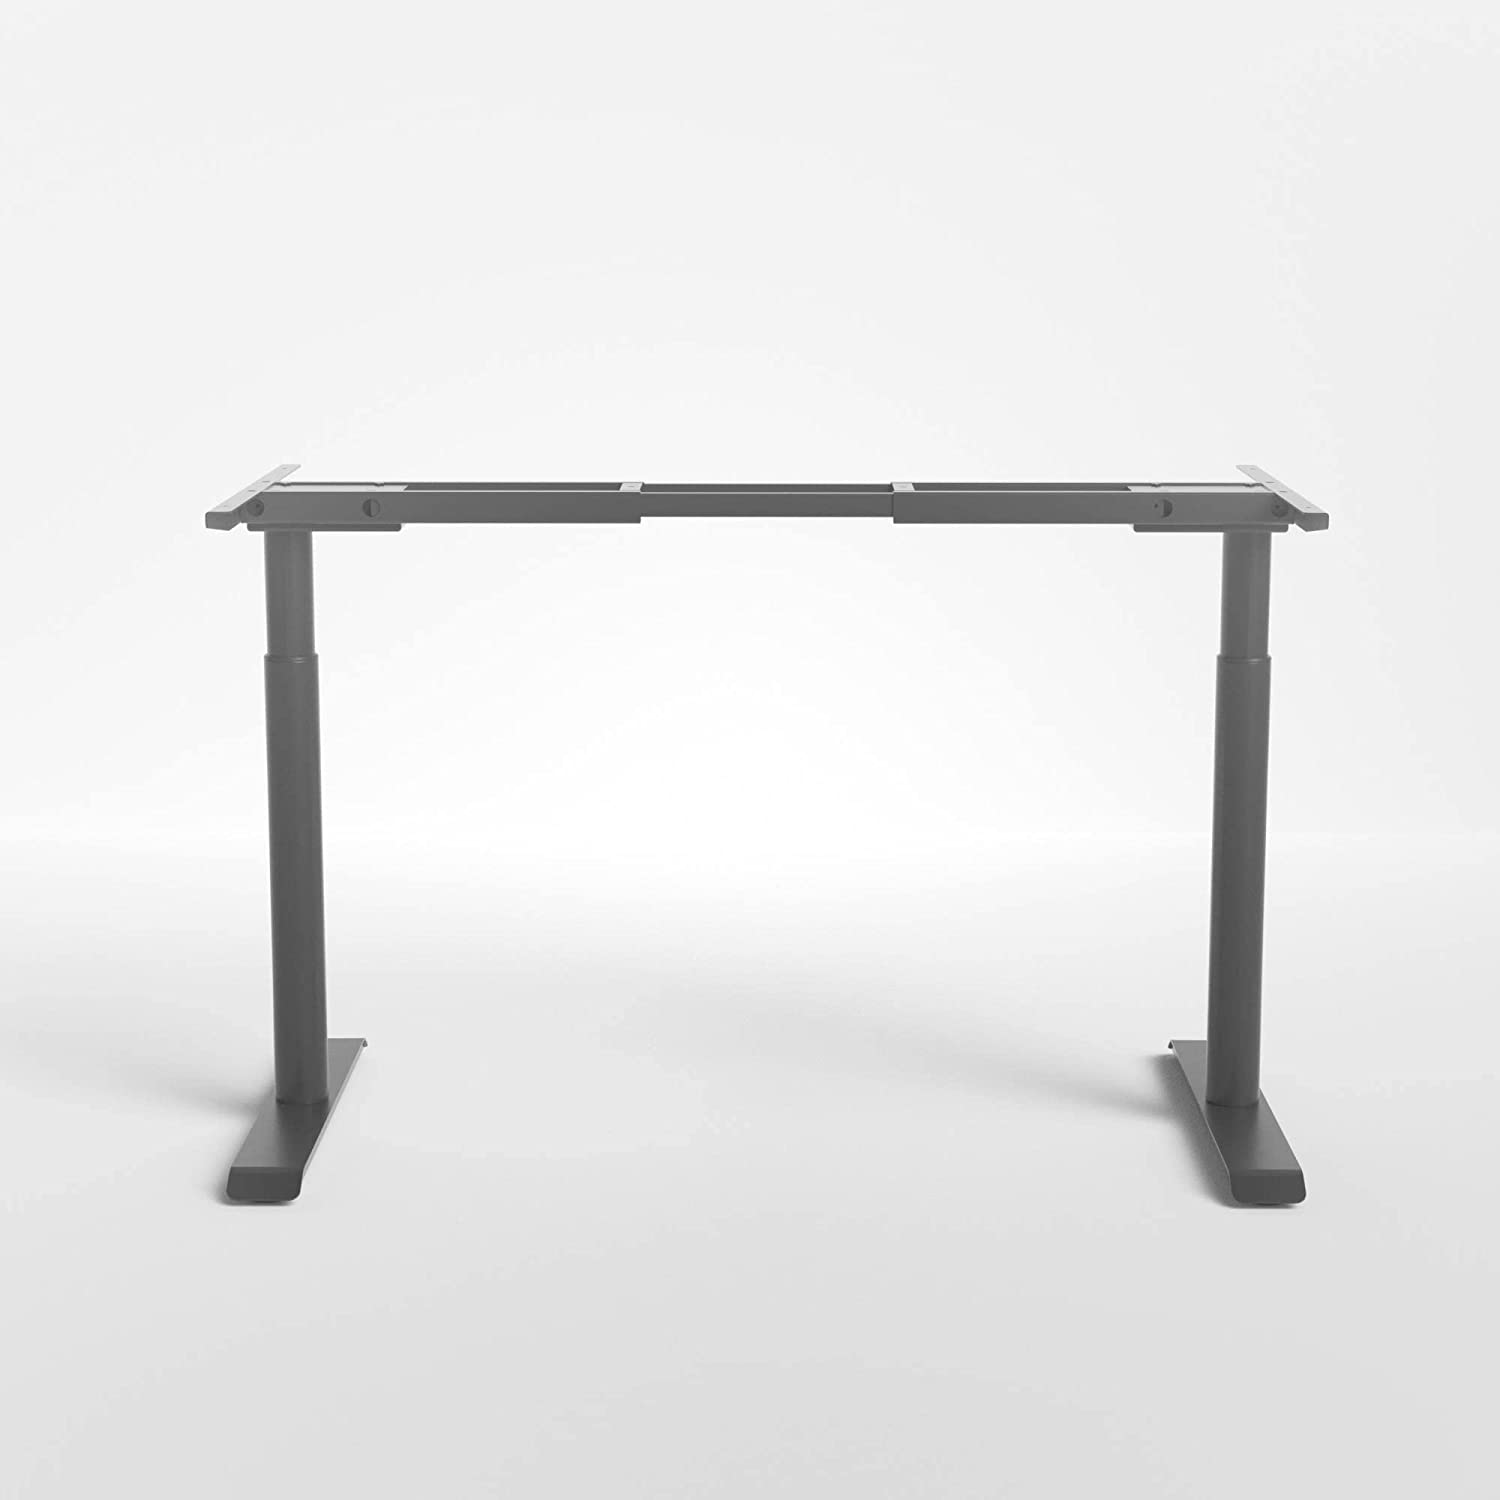 Basic Desk Frame By Navodesk, Manual Height Adjustable Desk Frame, Underframe for table top (Pin type) (Black)